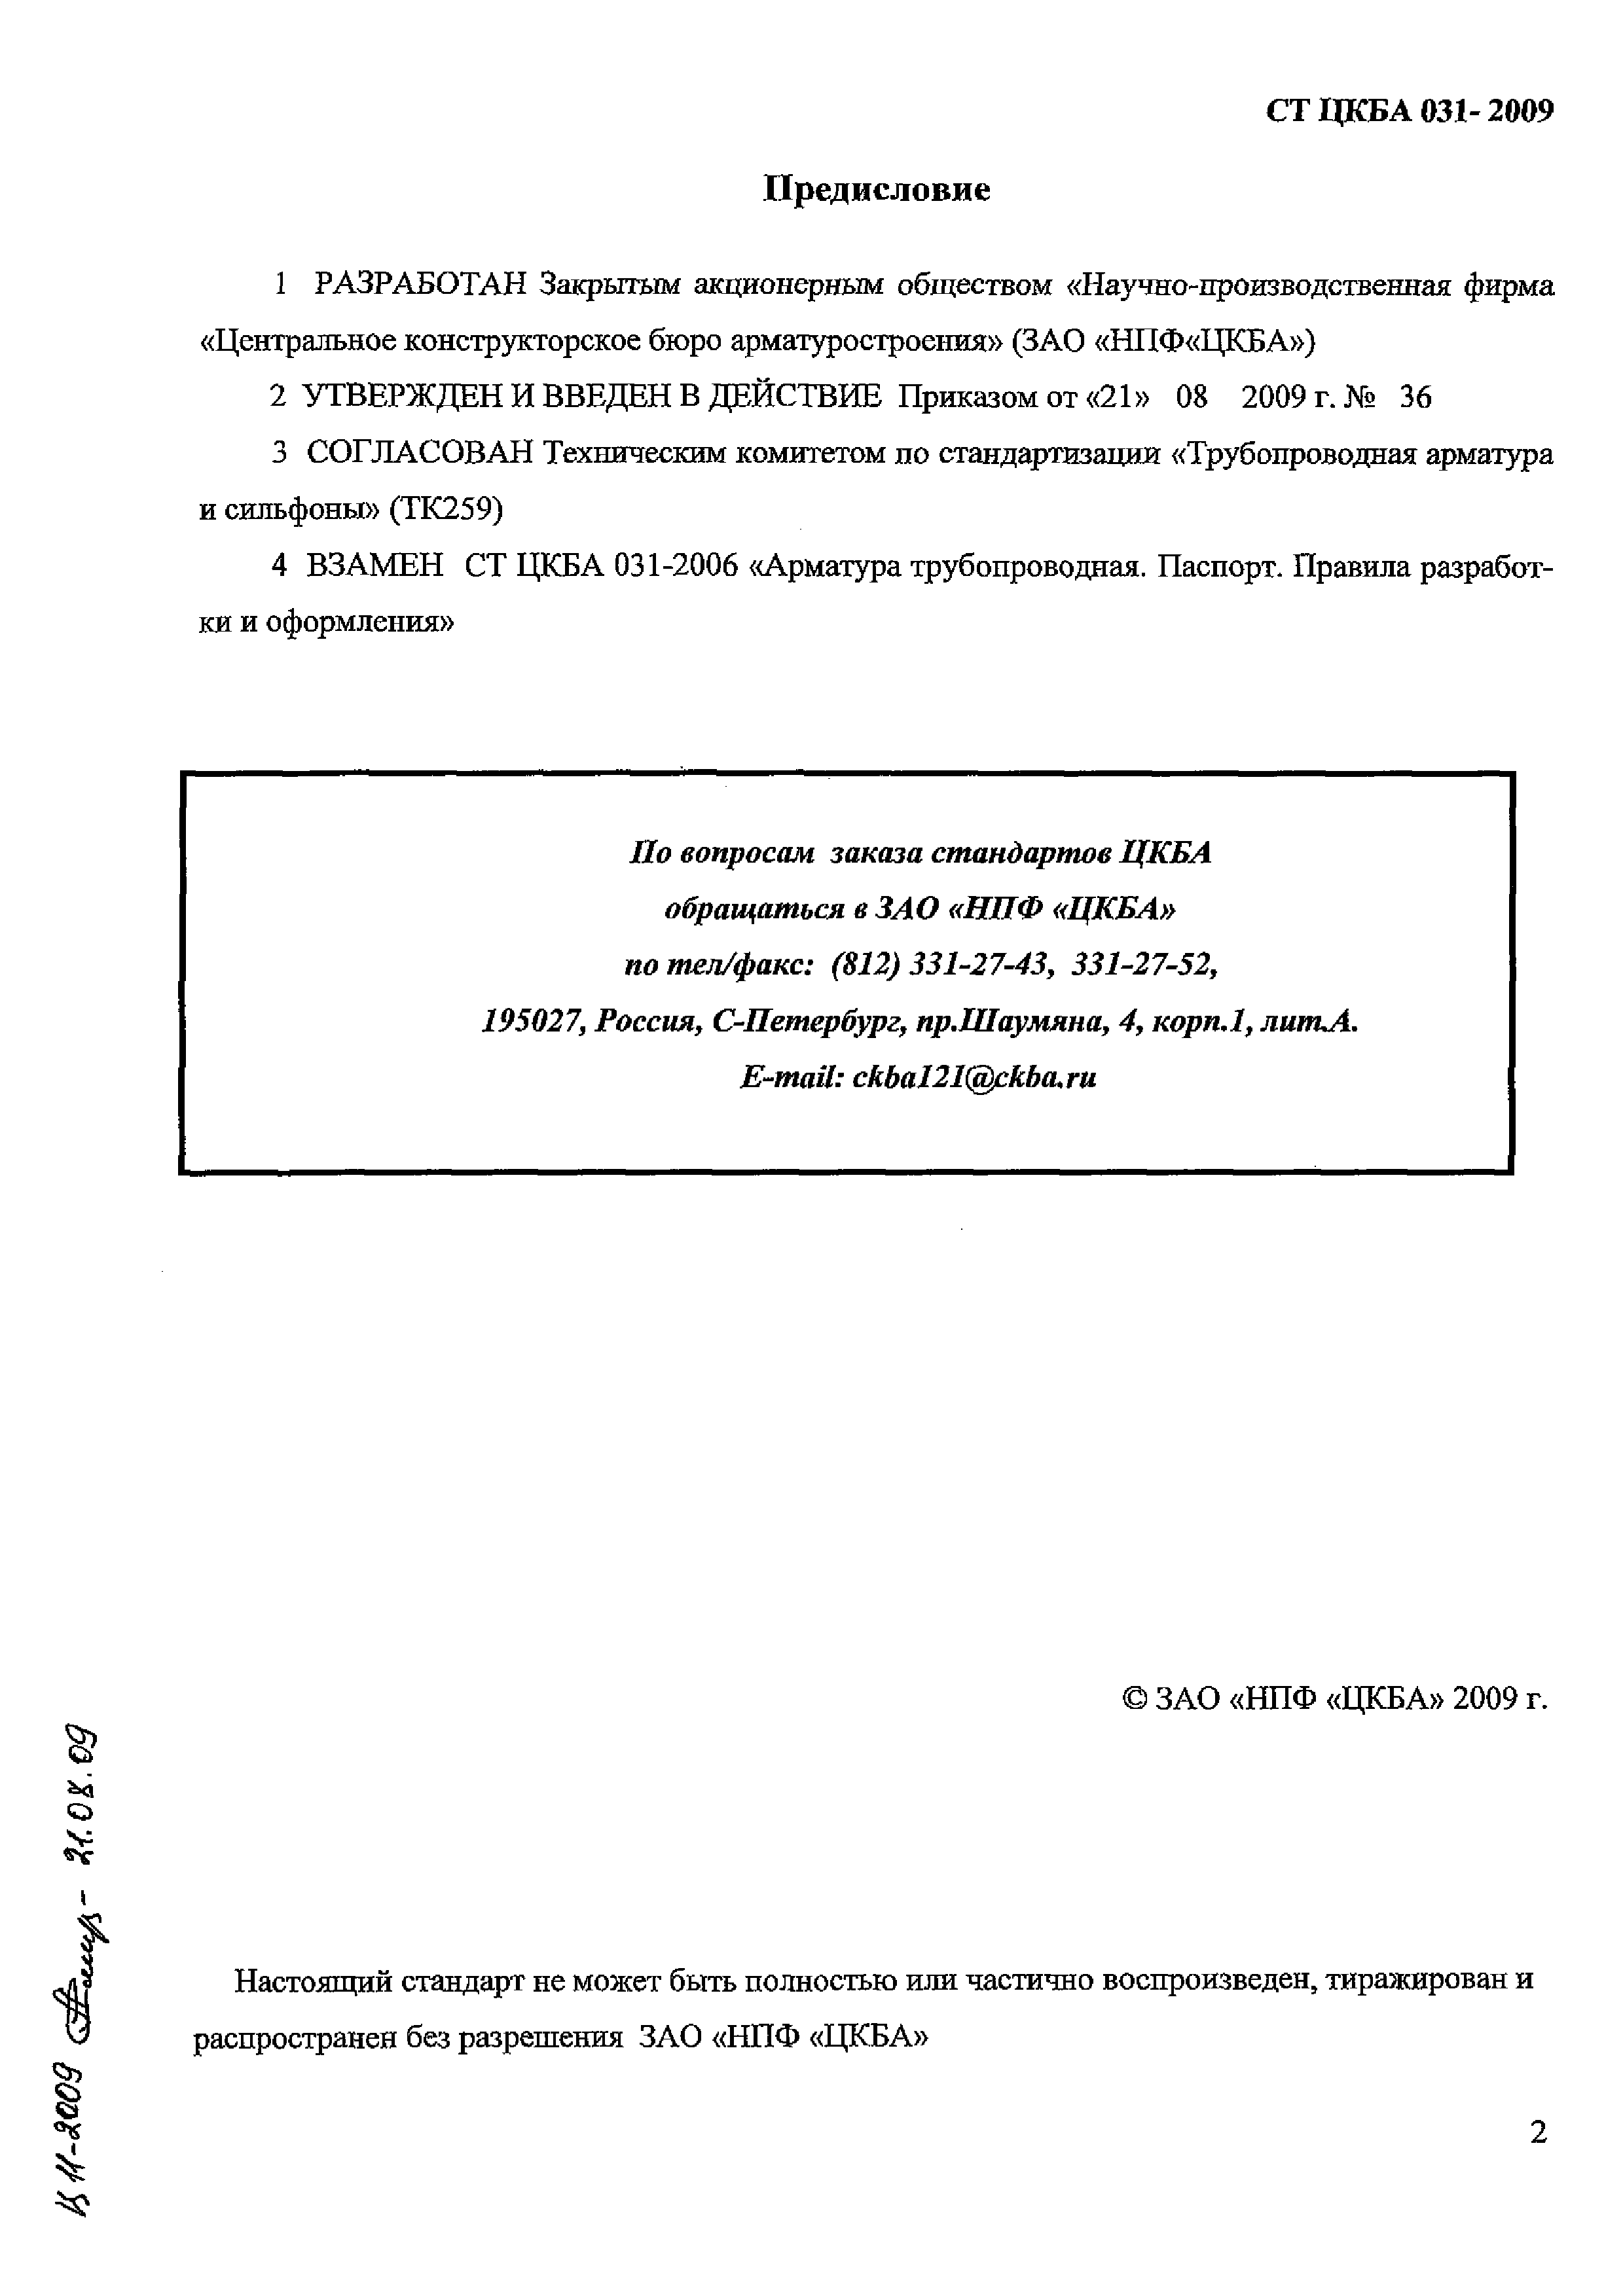 СТ ЦКБА 031-2009